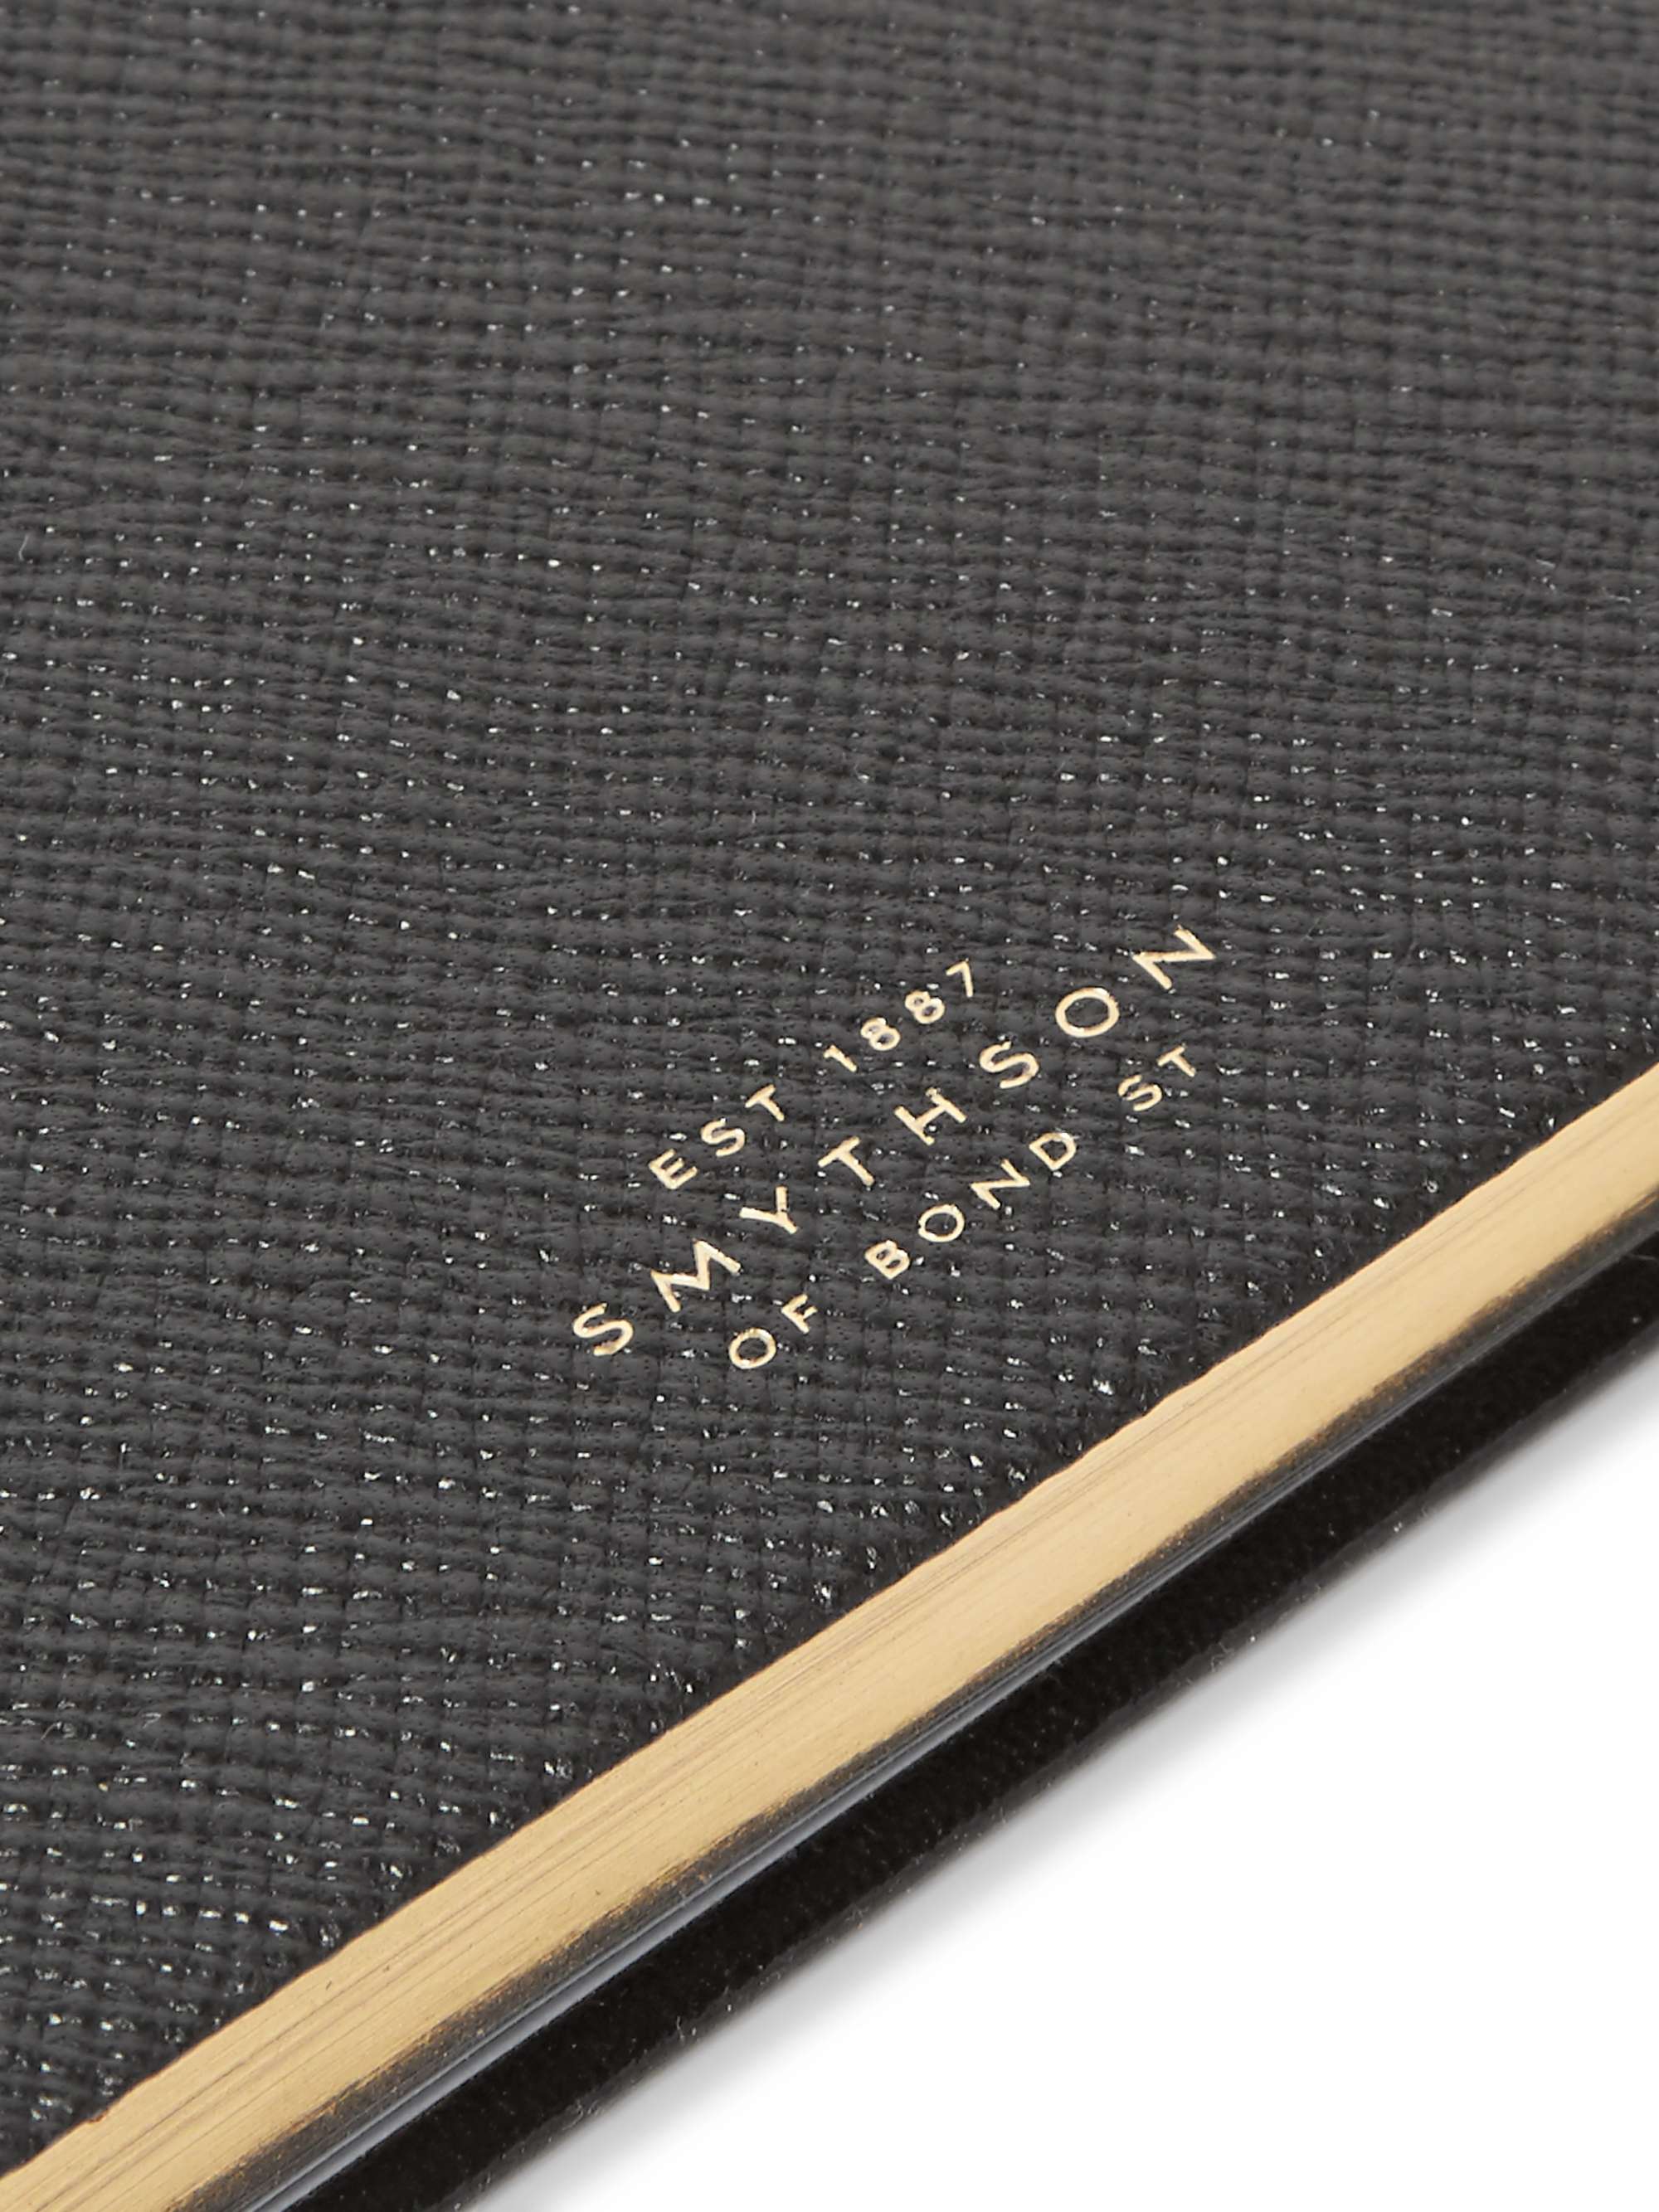 SMYTHSON notebooks